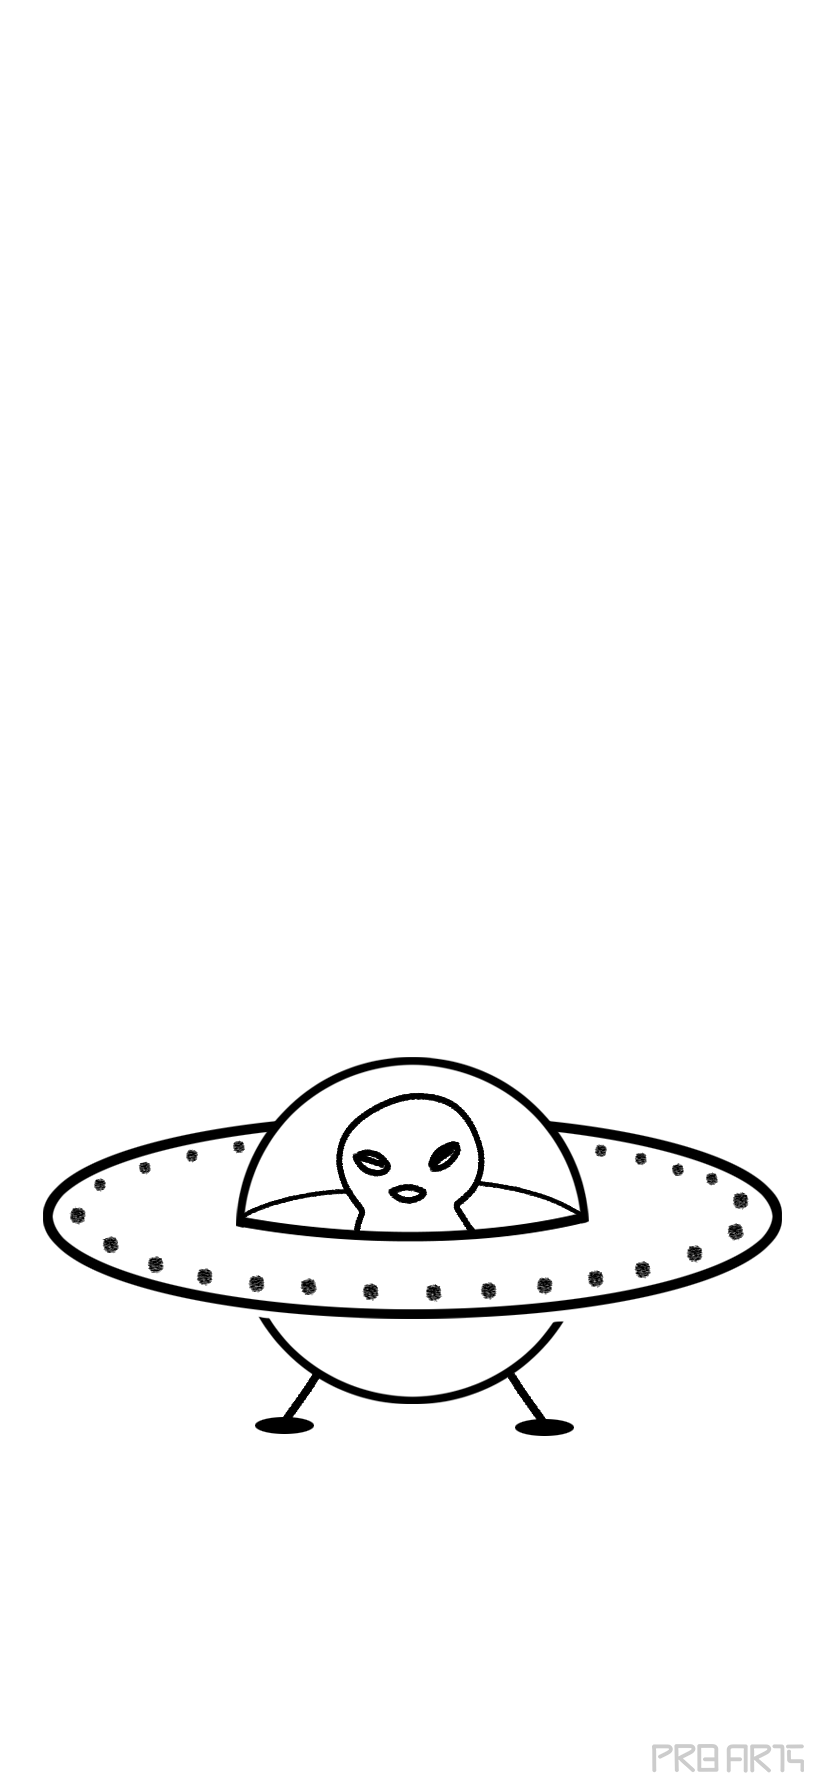 UFO Drawing Tutorial for kids - PRB ARTS